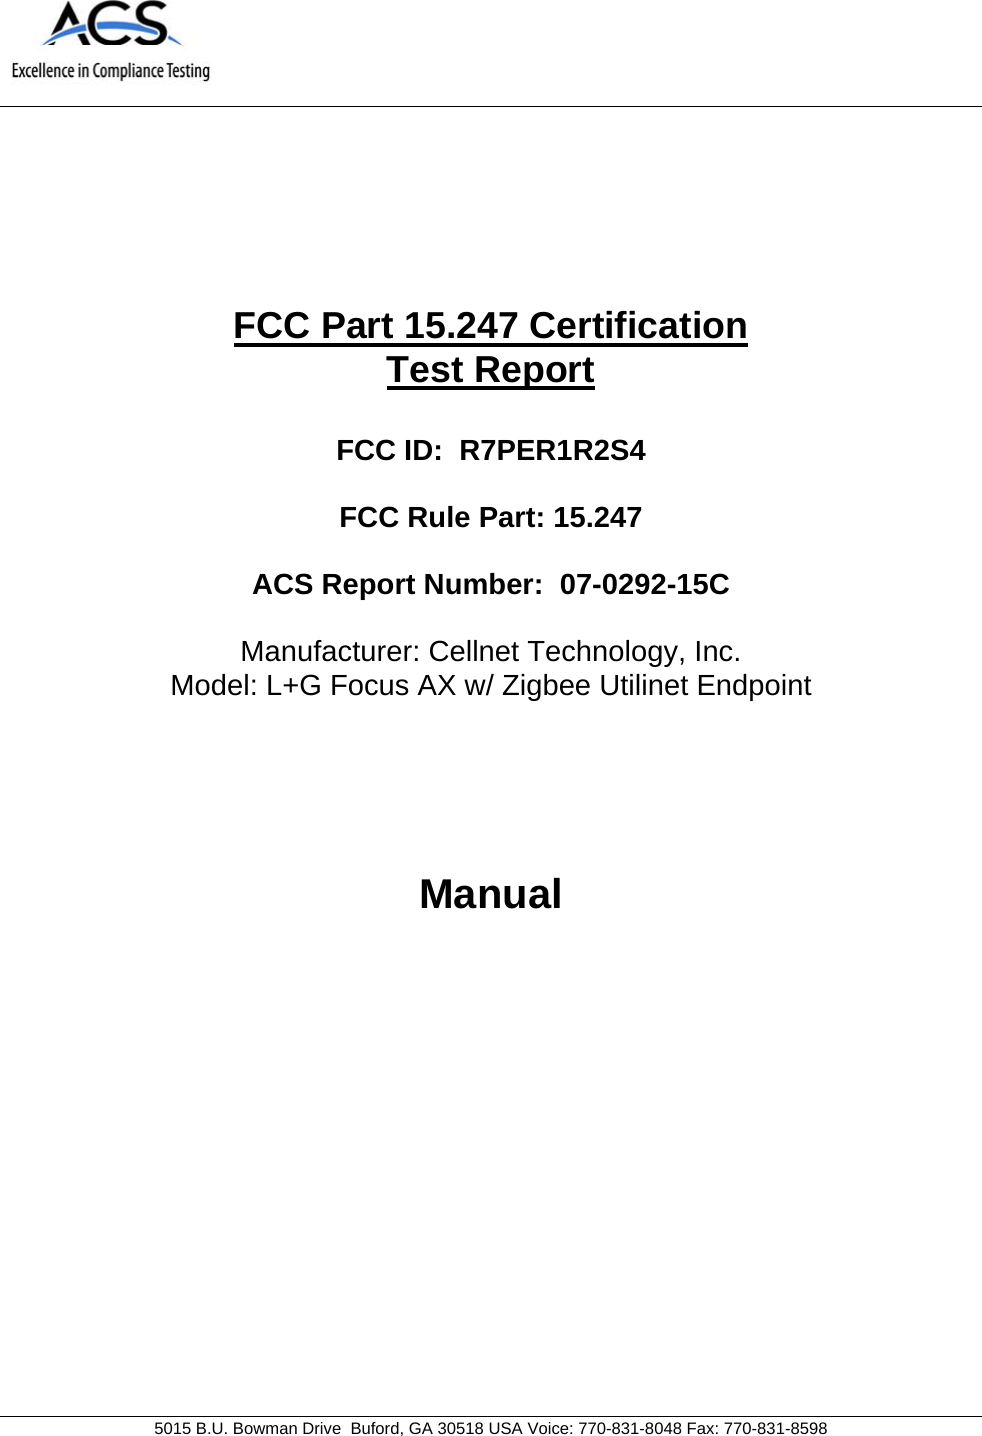                                             5015 B.U. Bowman Drive  Buford, GA 30518 USA Voice: 770-831-8048 Fax: 770-831-8598       FCC Part 15.247 Certification Test Report  FCC ID:  R7PER1R2S4  FCC Rule Part: 15.247  ACS Report Number:  07-0292-15C   Manufacturer: Cellnet Technology, Inc. Model: L+G Focus AX w/ Zigbee Utilinet Endpoint     Manual 